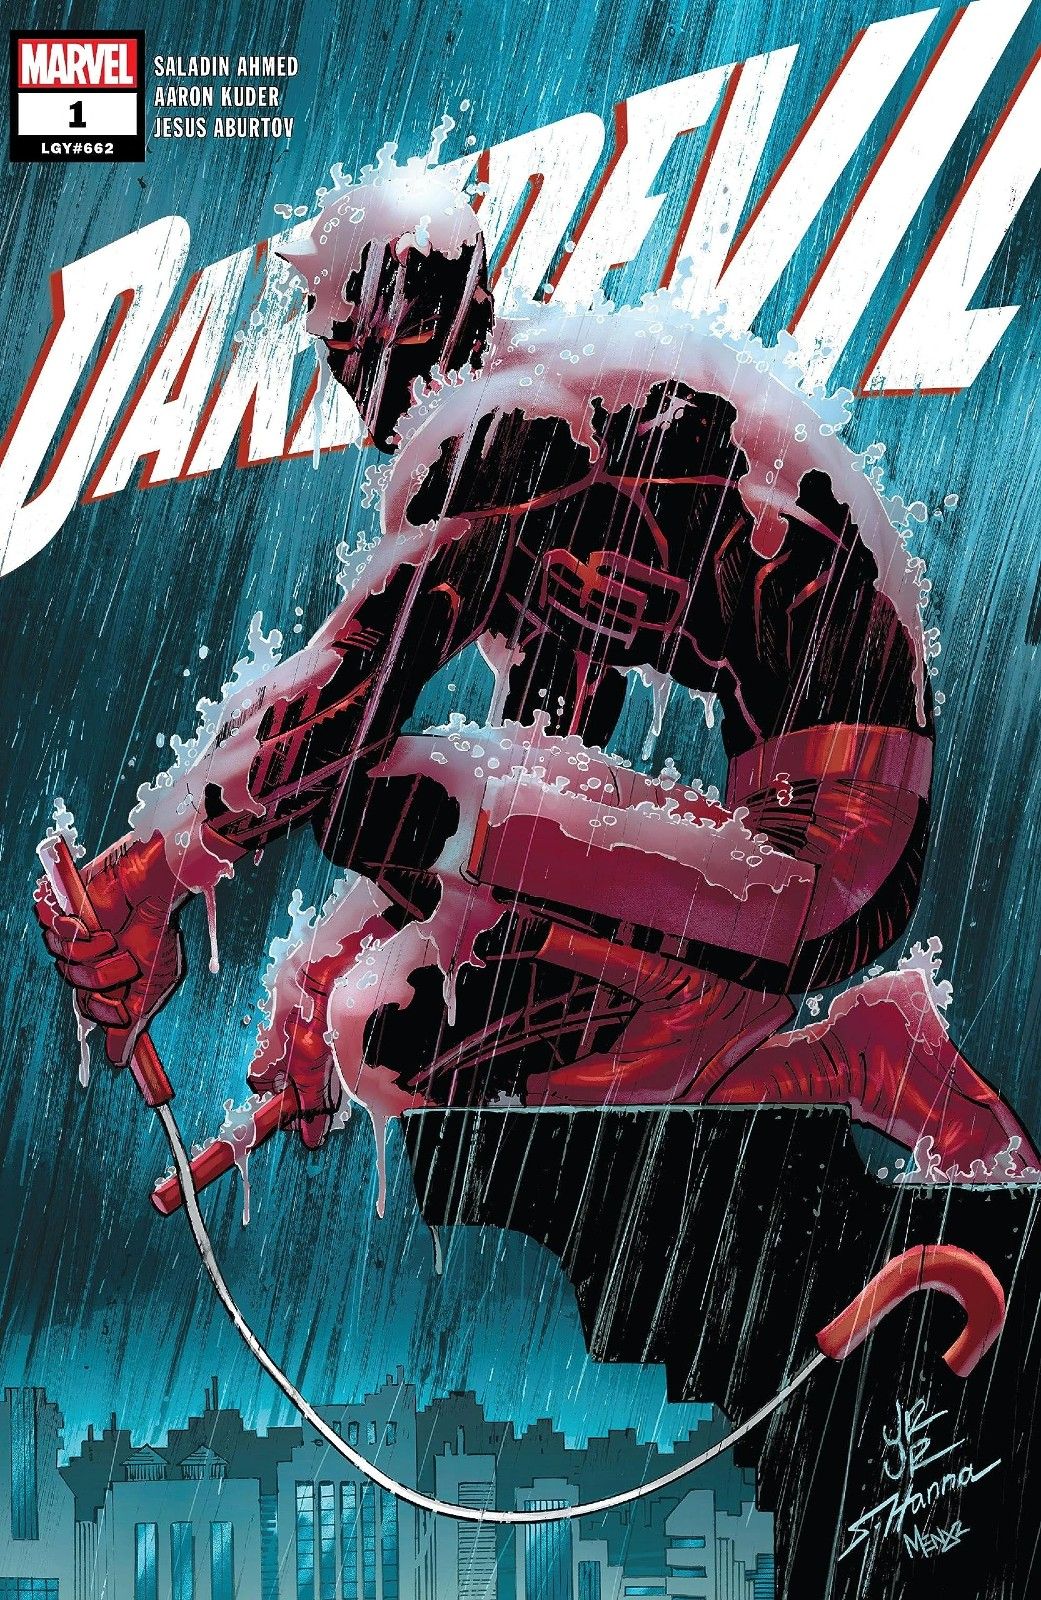 Daredevil perched on the edge of a building in the rain in Daredevil (Vol. 8) #1 by Marvel Comics